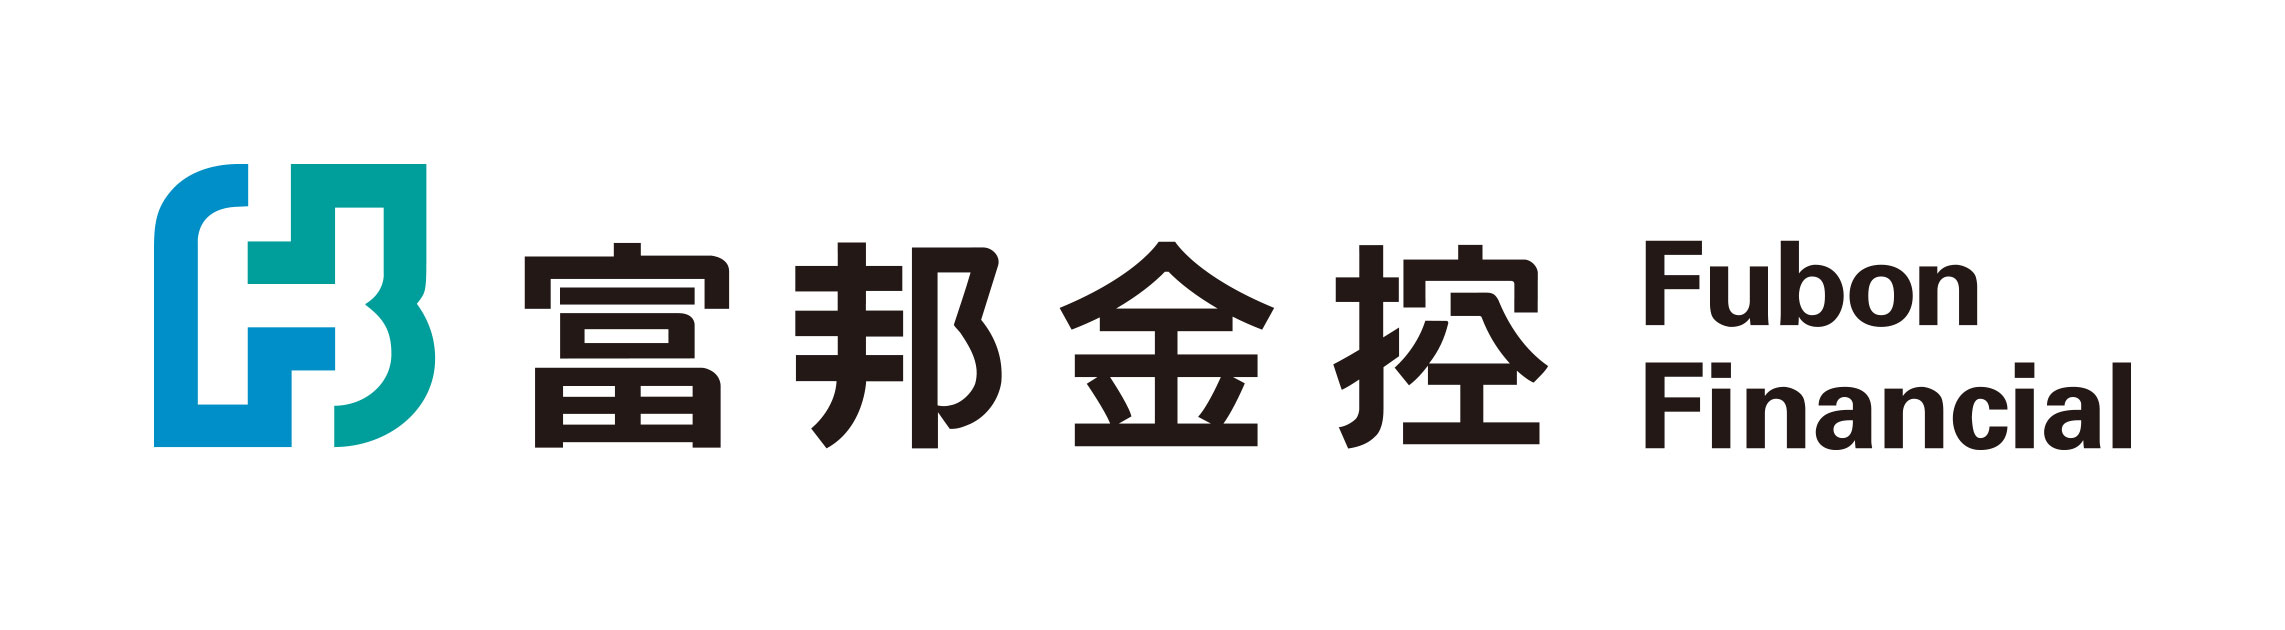 logo_fubon-en.jpg